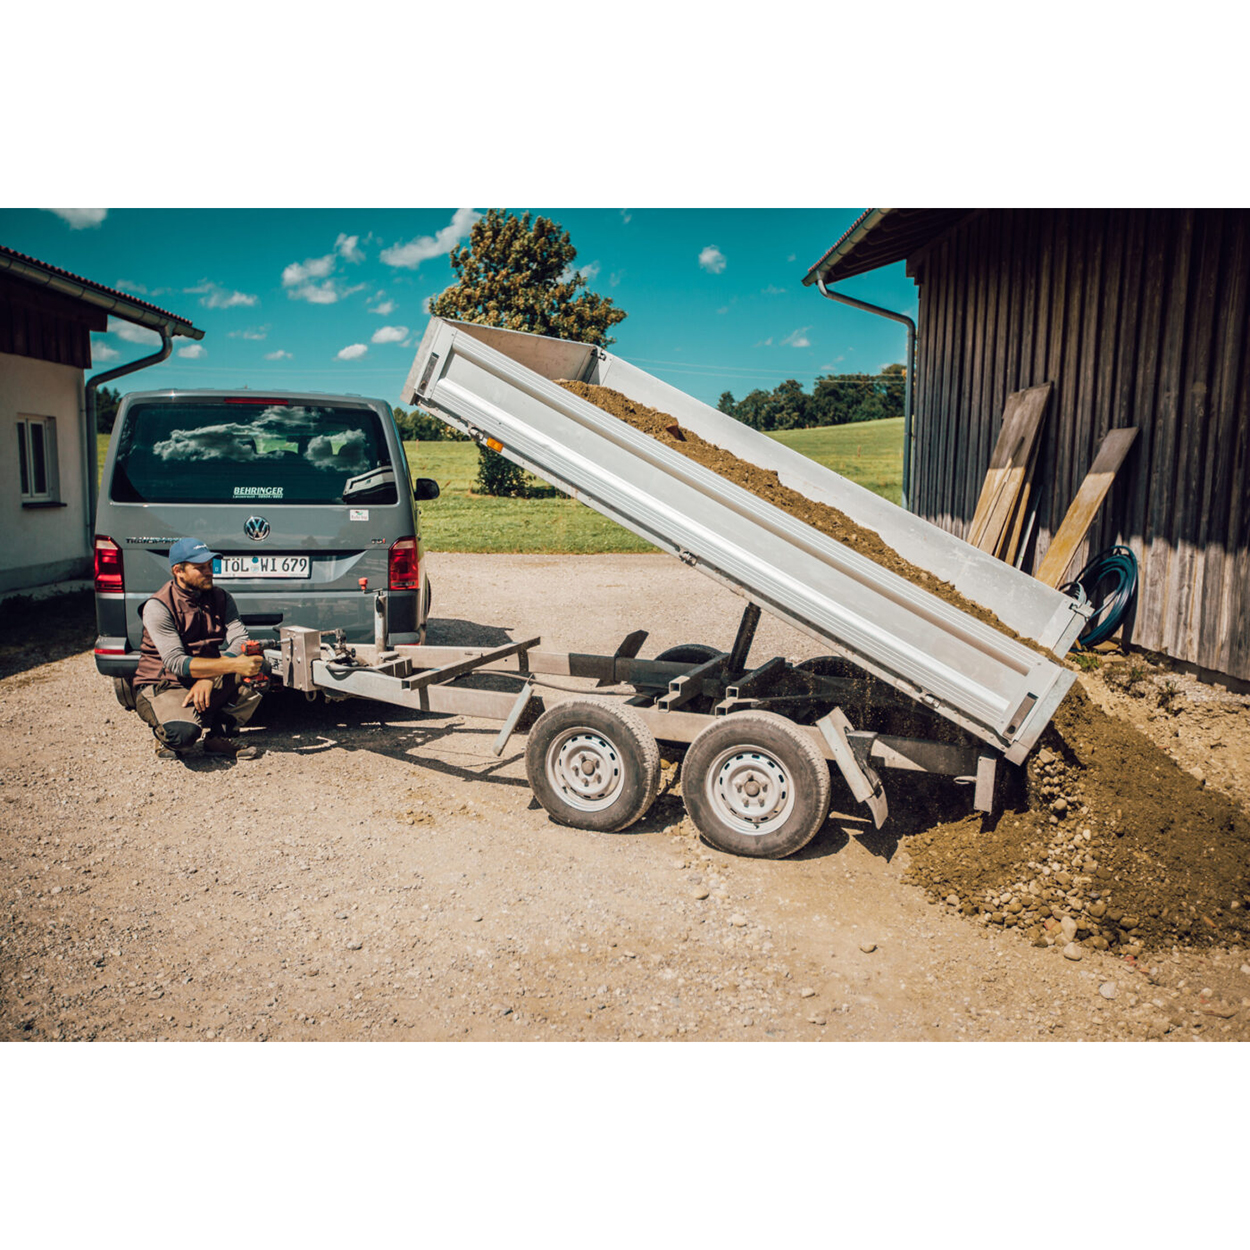 PumpFast – trailer hydraulic pump set for cordless screwdriver operation